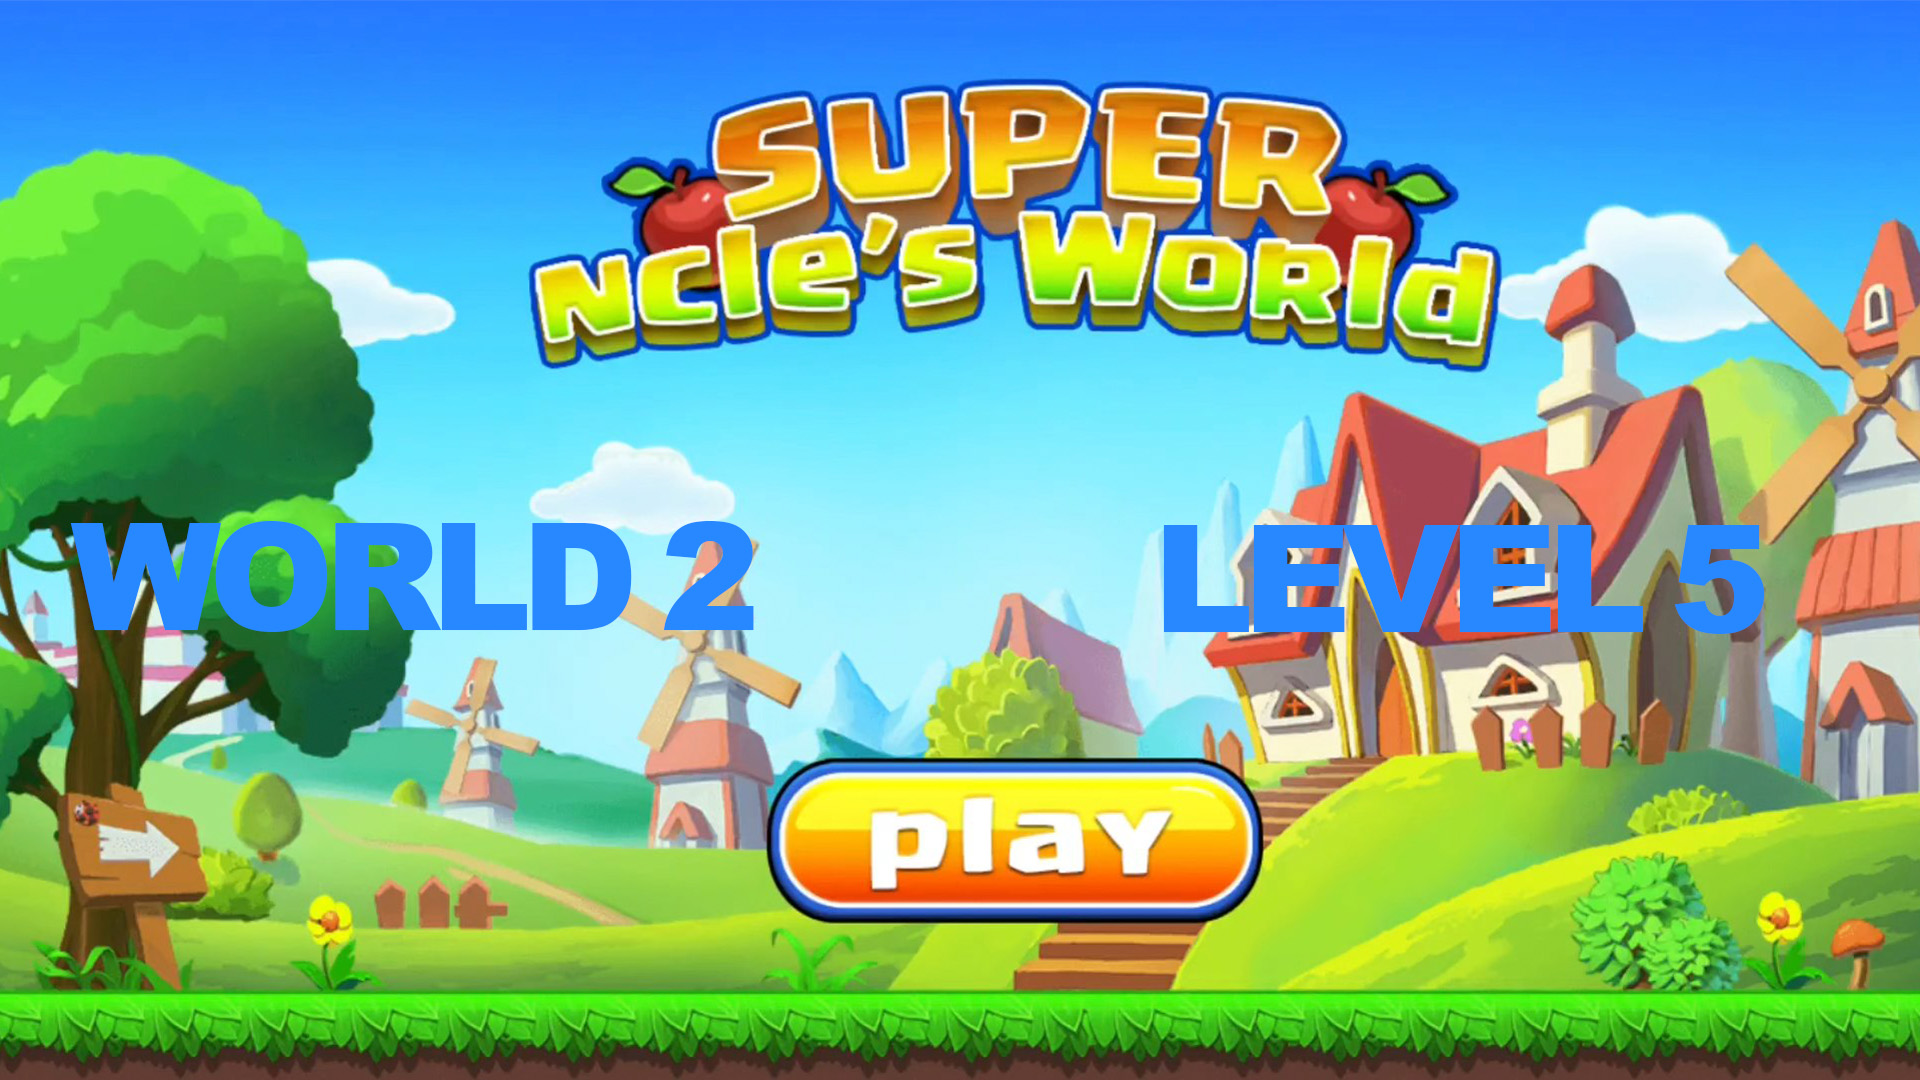 Super ncle's  World 2. levei 5.